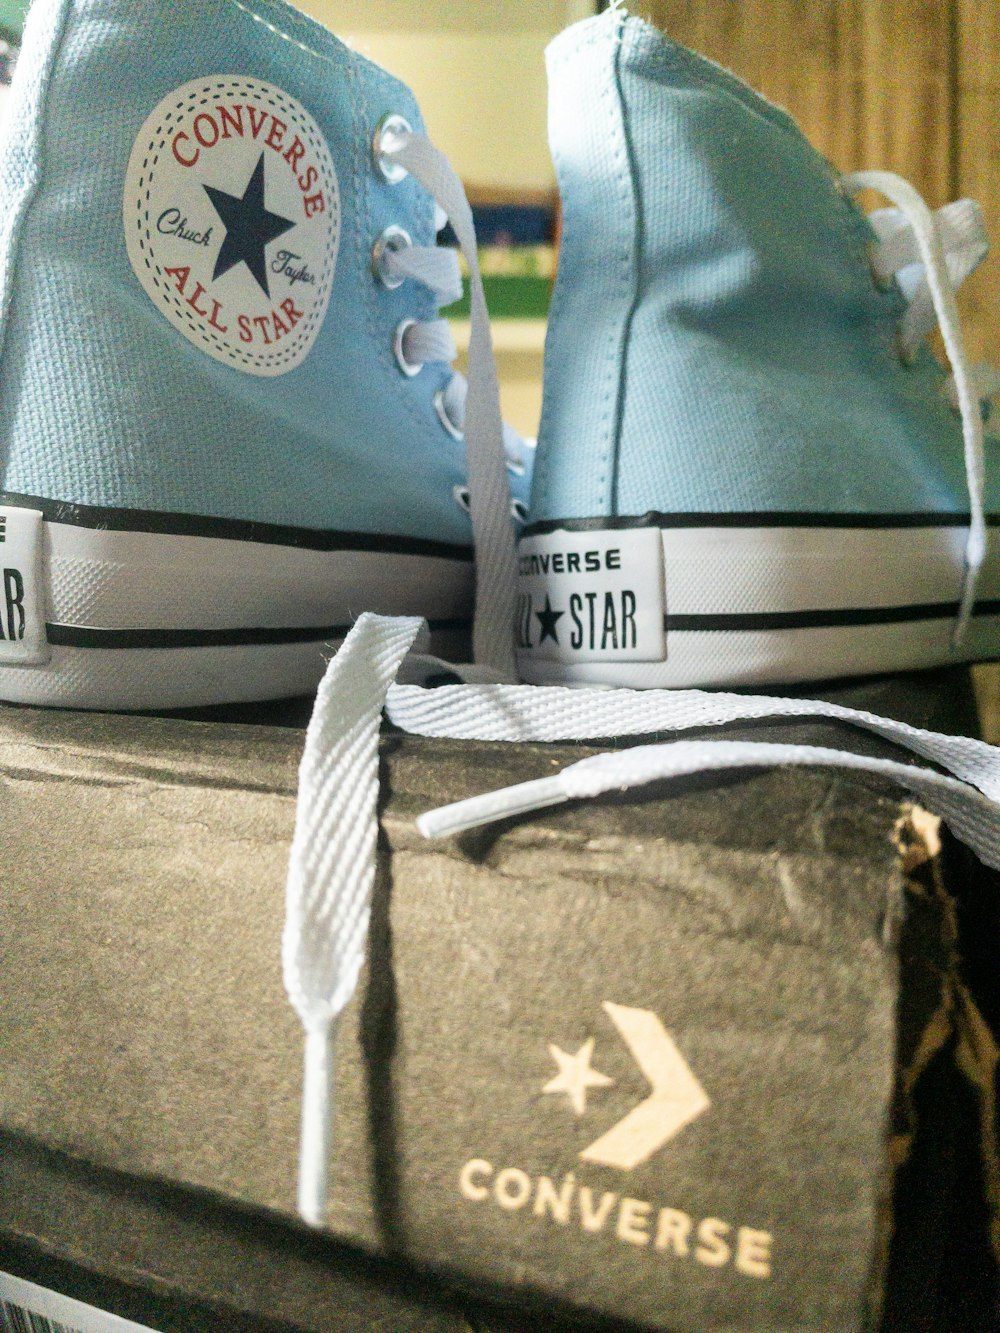 Un paio di scarpe Converse blu sedute sopra una scatola